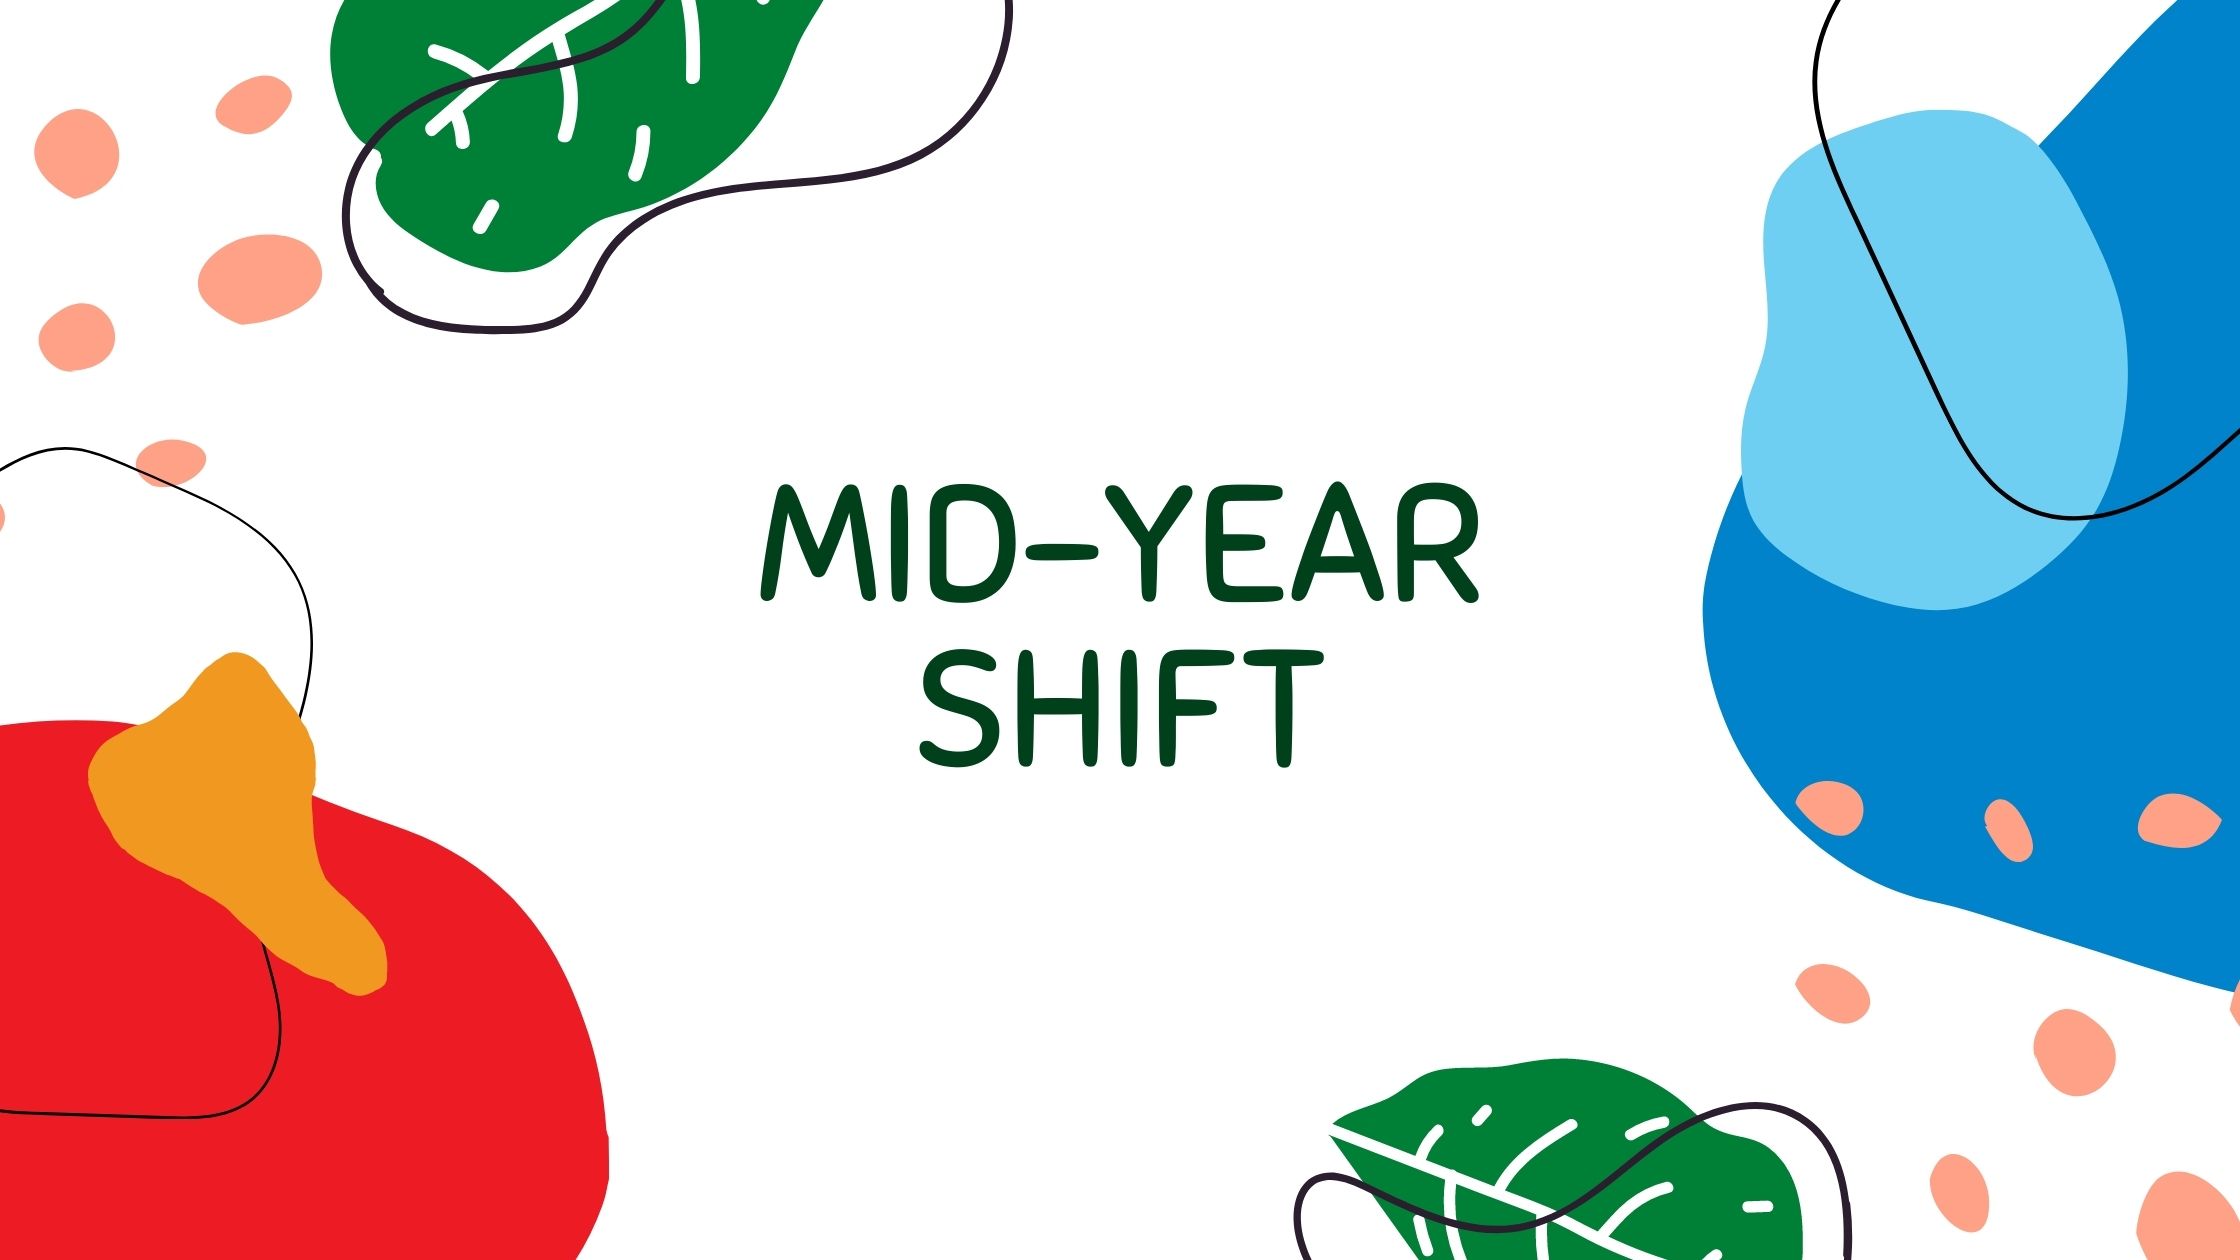 Mid-year shift